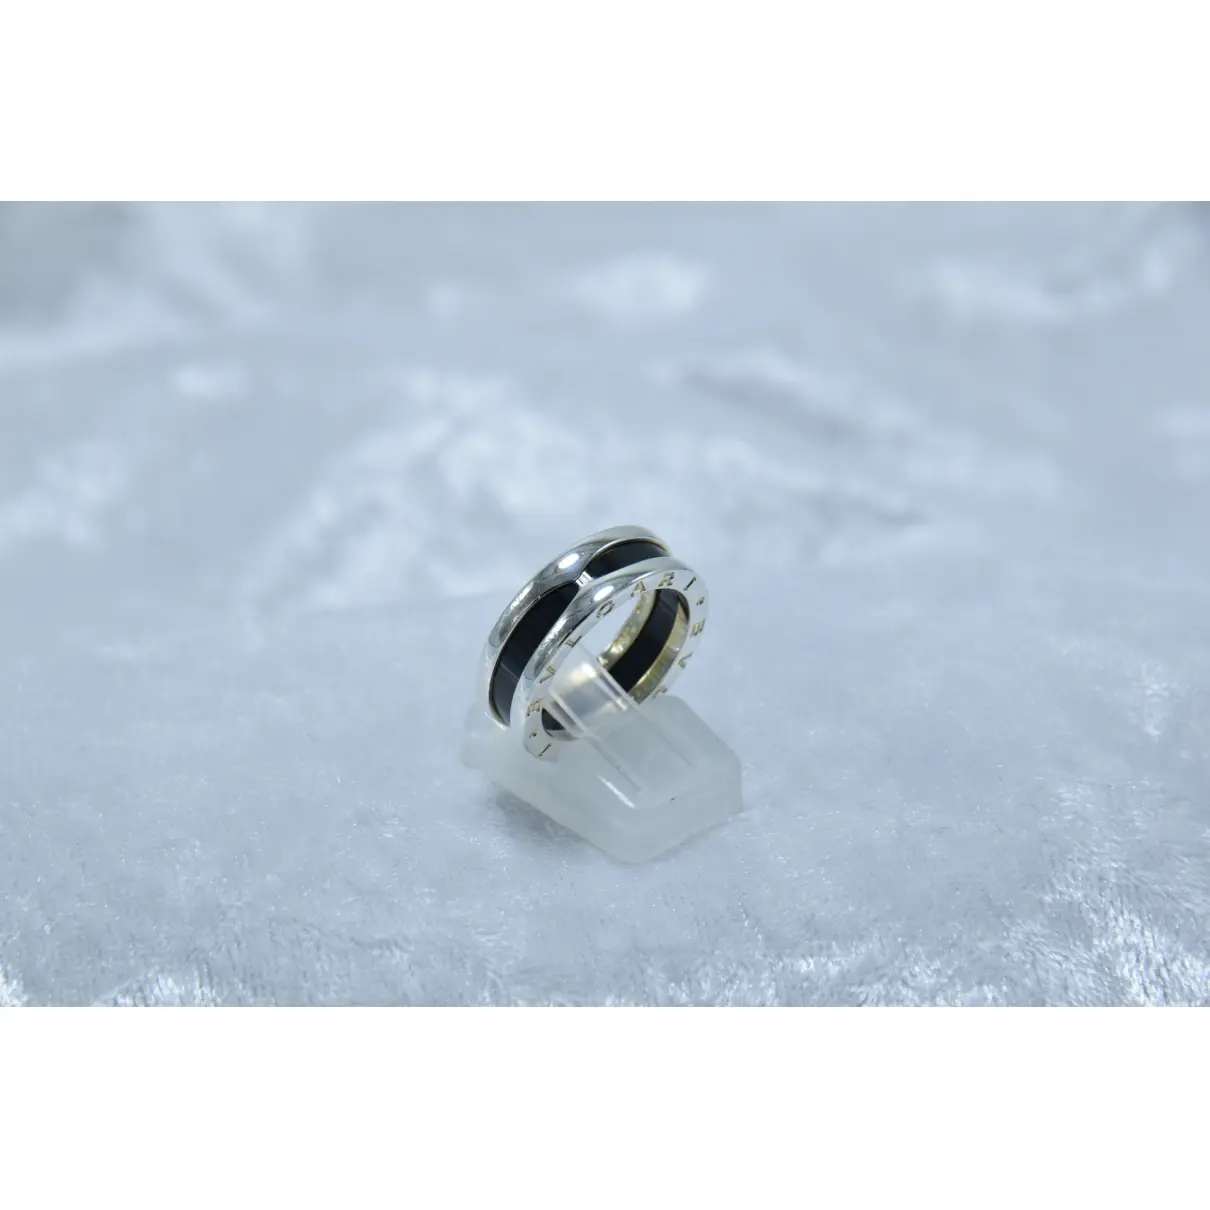 Buy Bvlgari B.Zero1 silver ring online